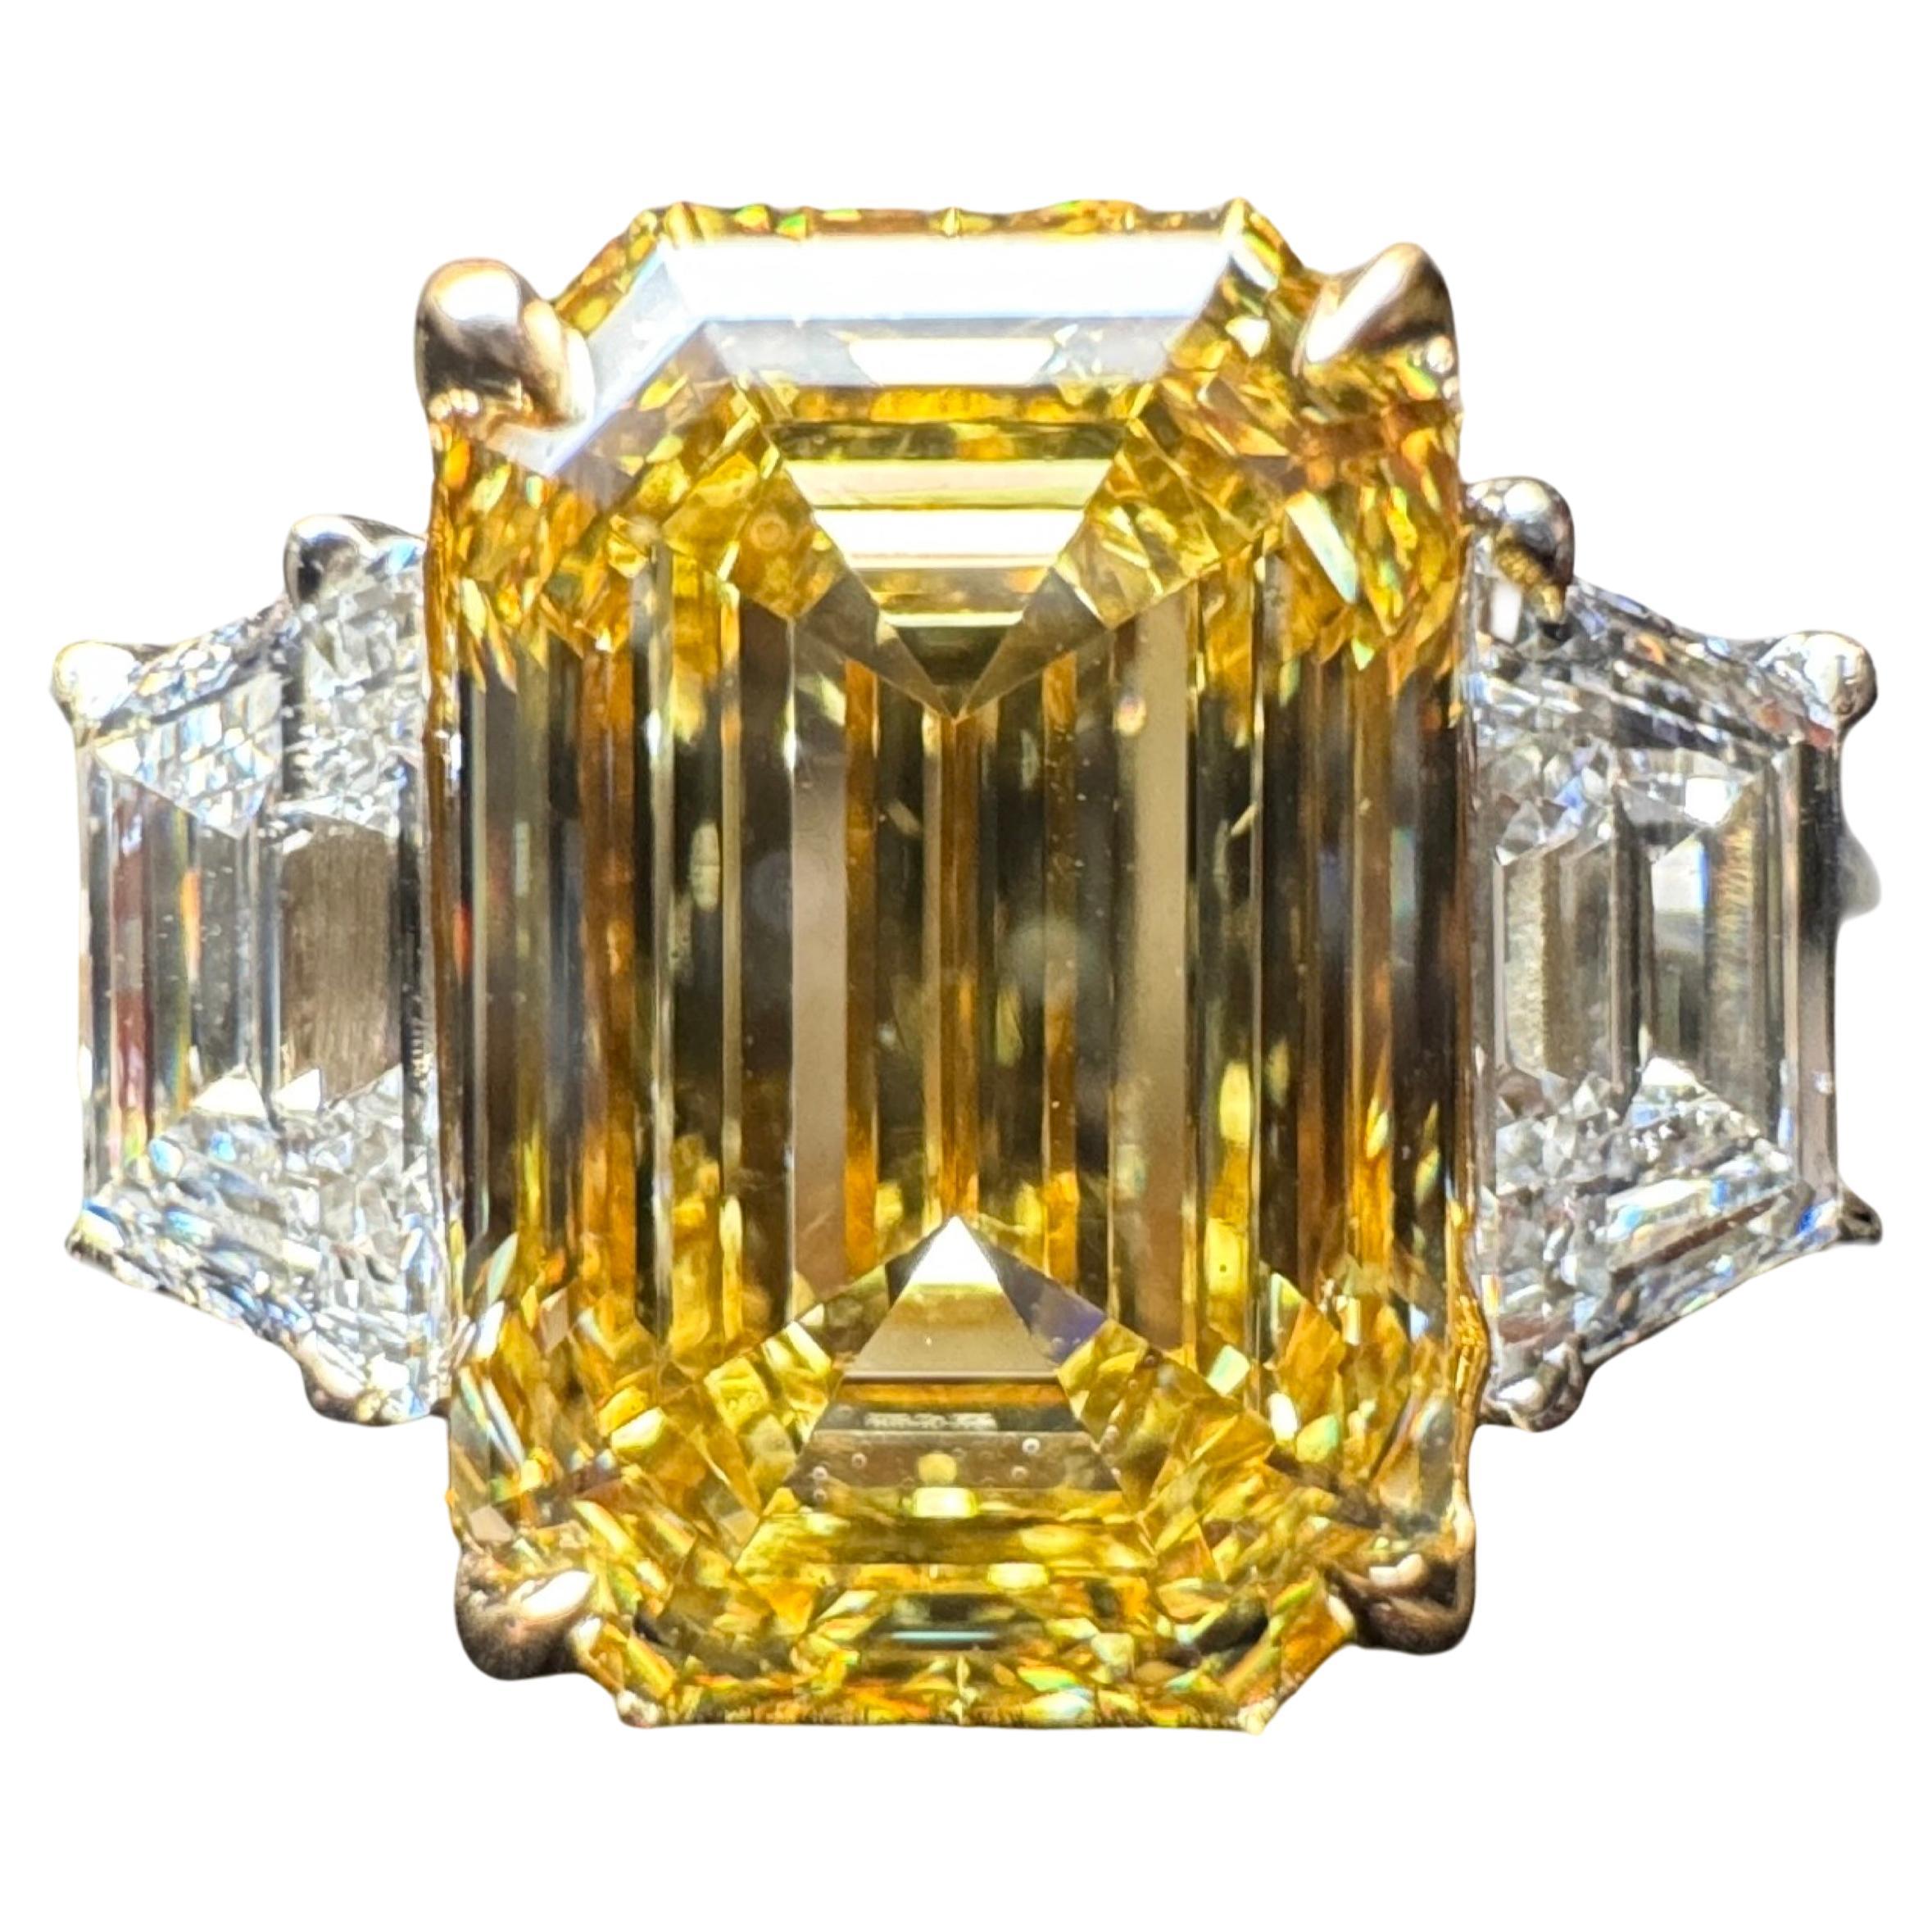 Is a 3 carat diamond considered big?